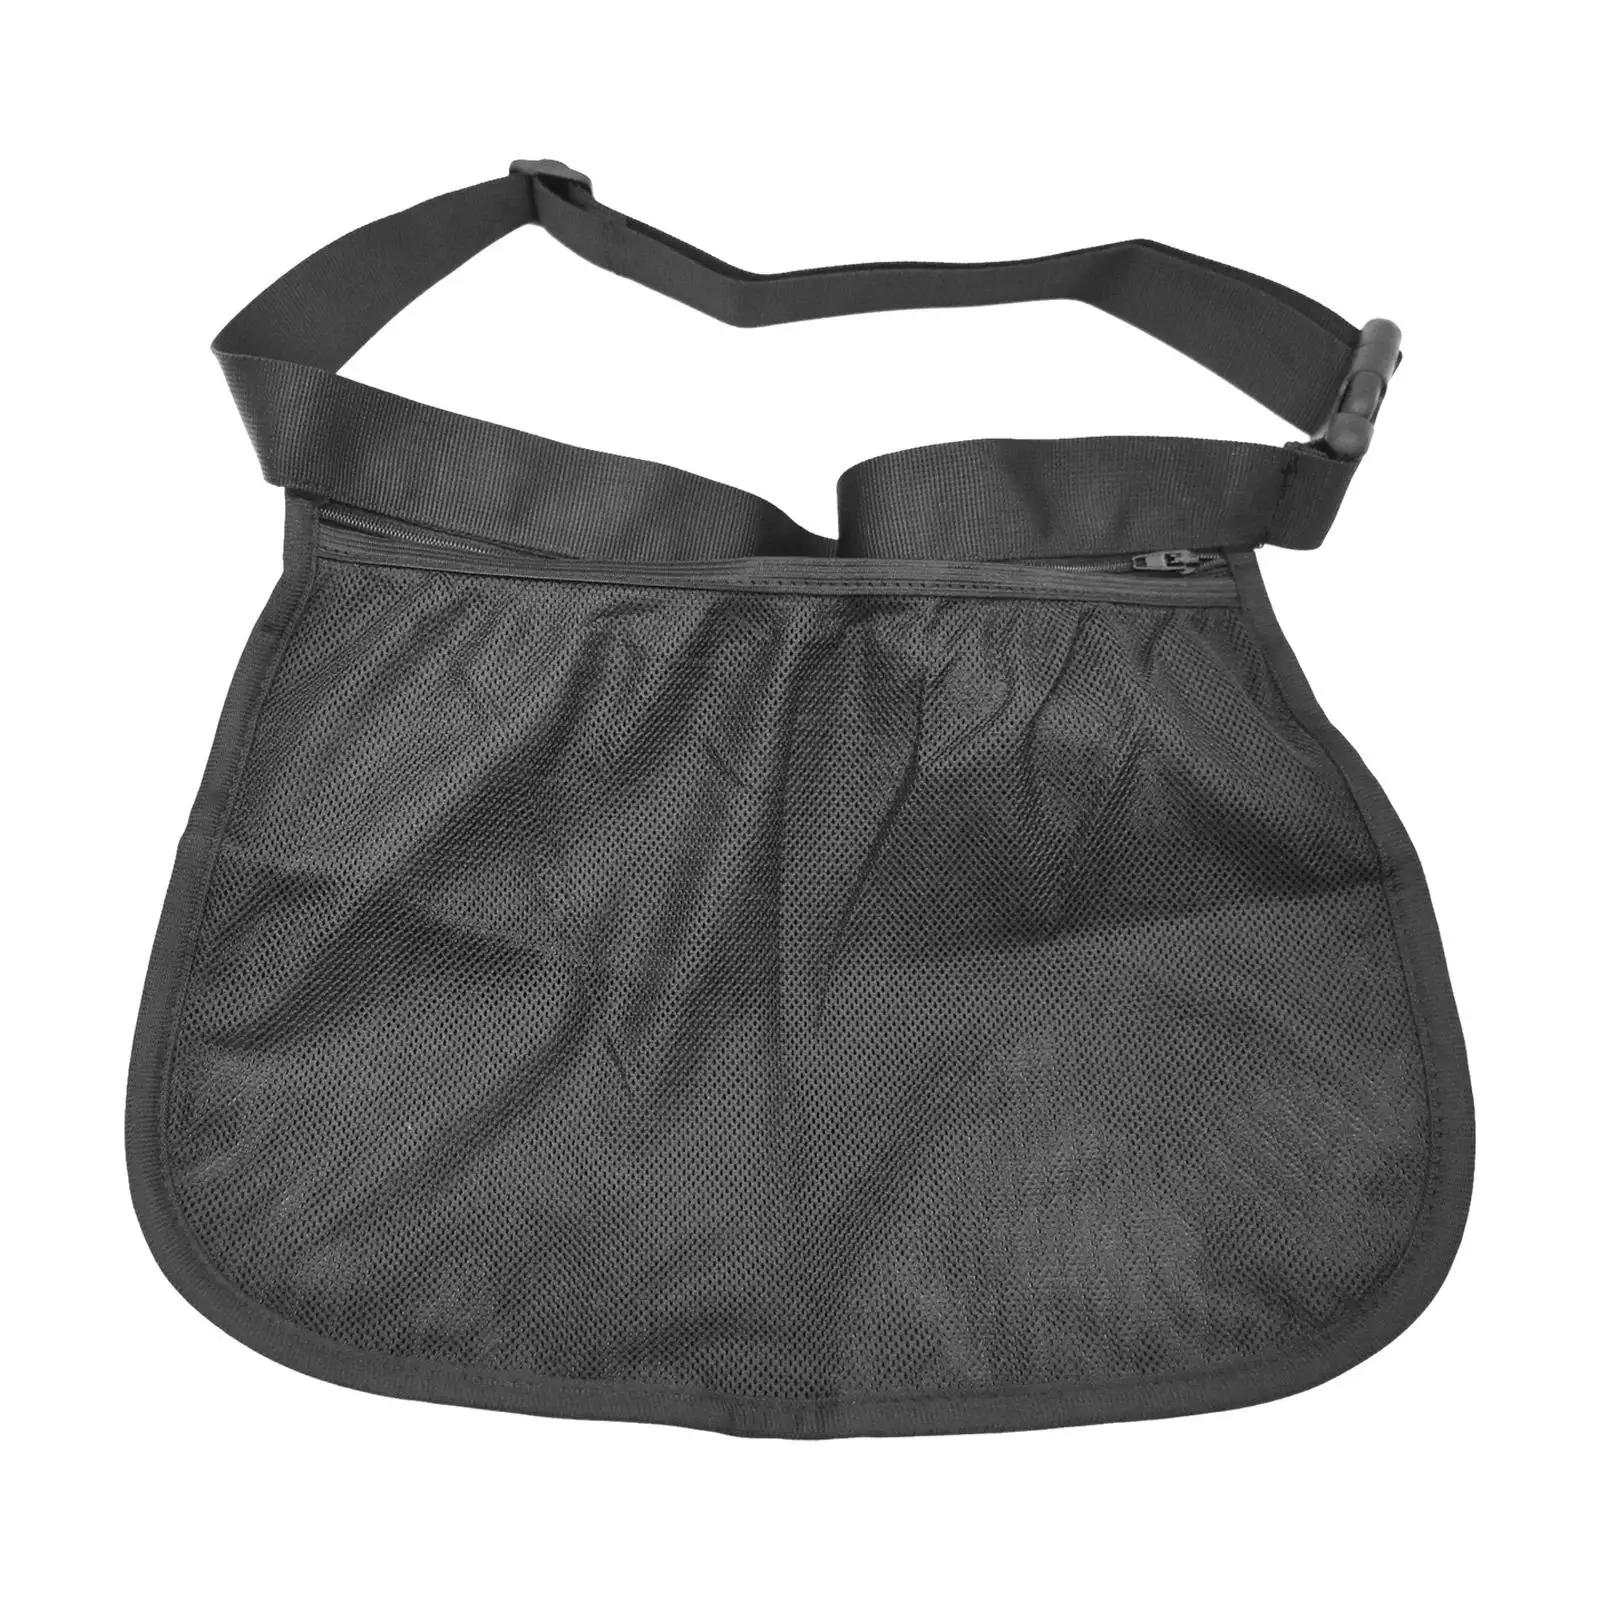 Tennis Ball Holder Mesh Storage Bag for Storing Balls and Phones Exercise